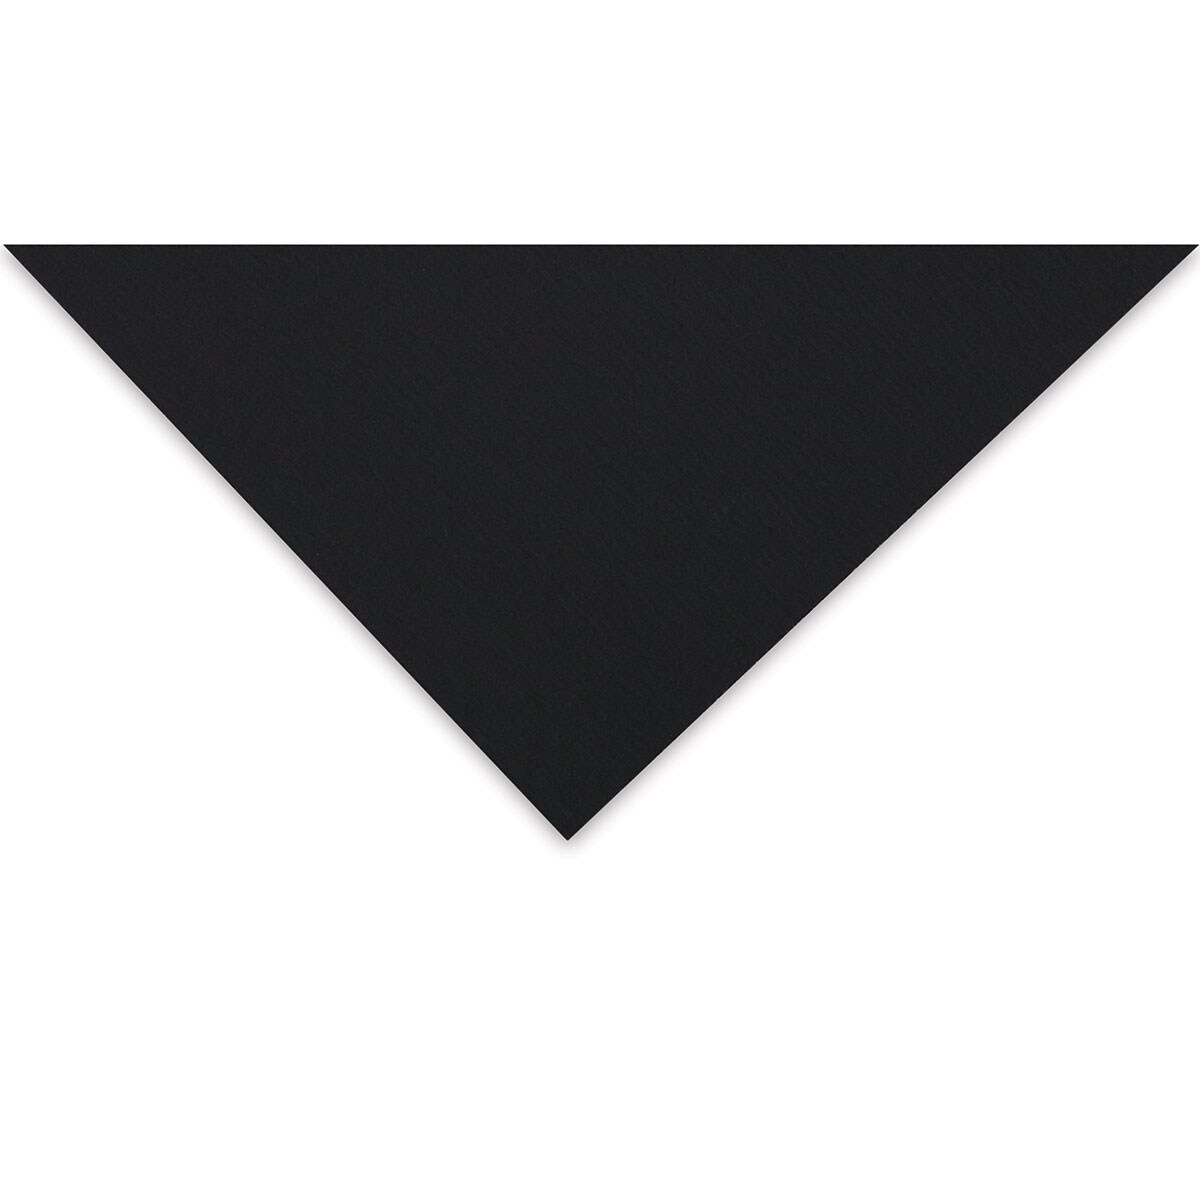 UArt Sanded Pastel Paper - Dark, 9 x 12, 400 Grade, Single Sheet